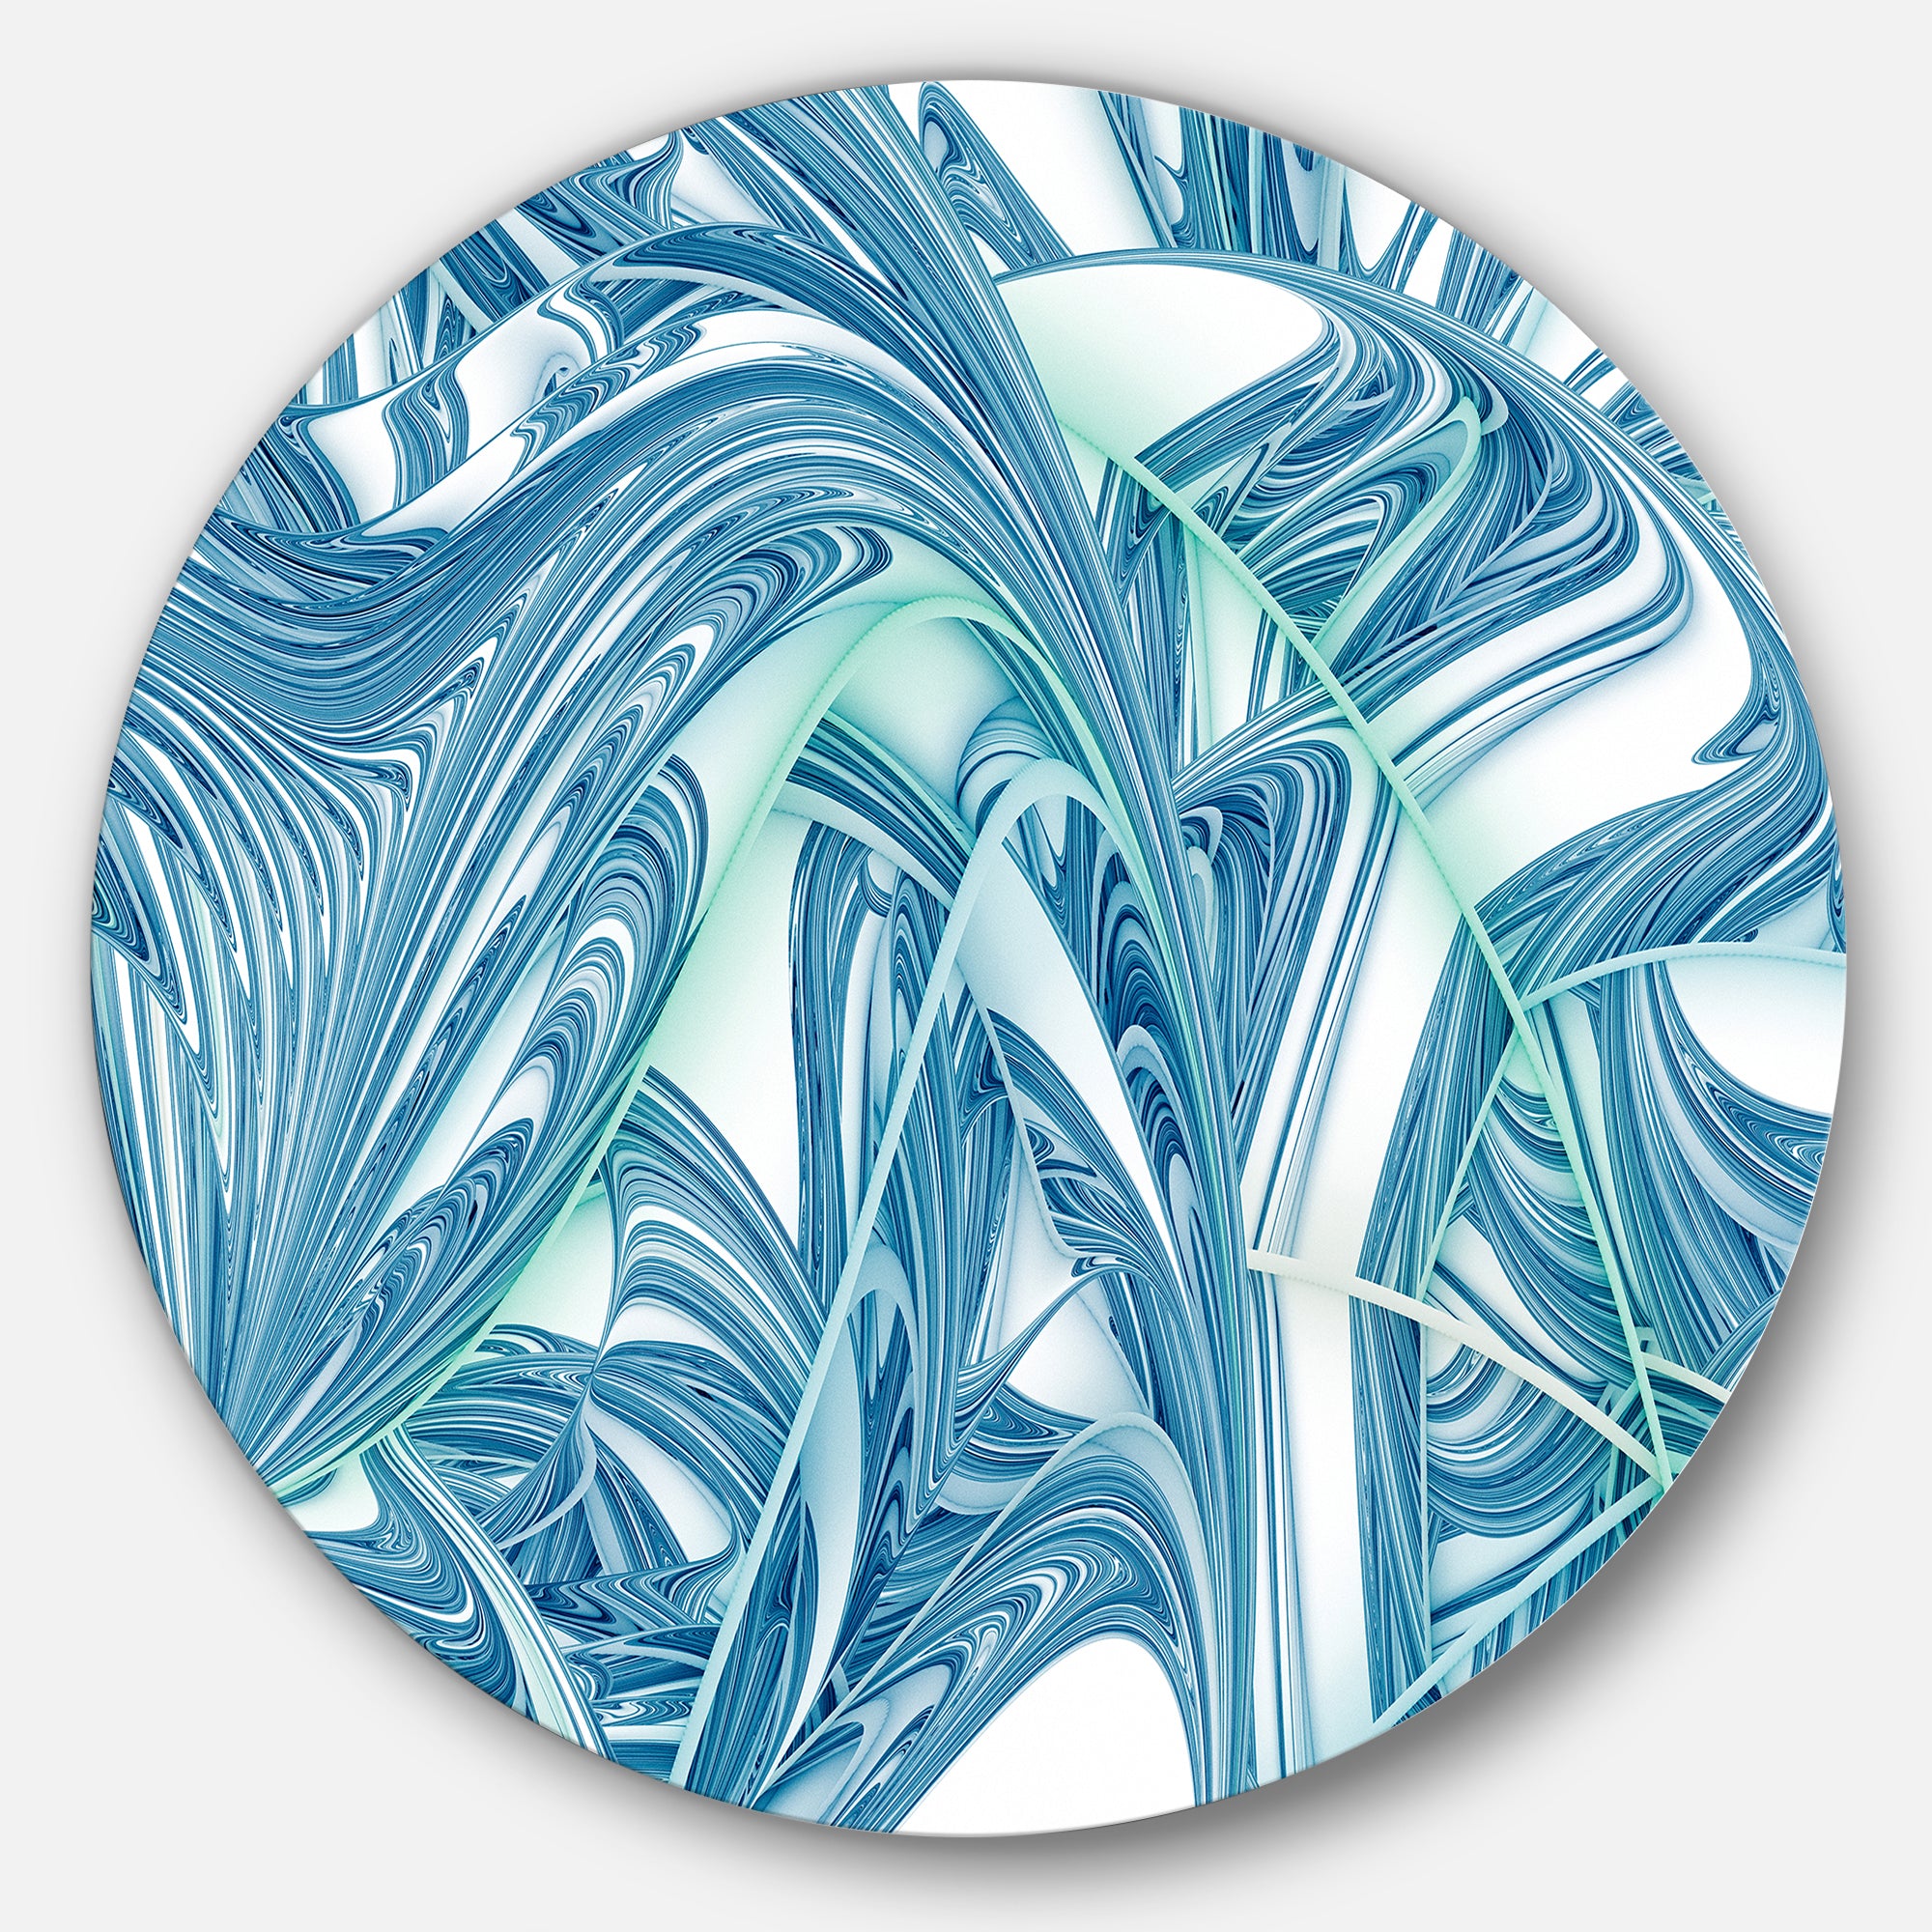 Unique Blue Fractal Design Pattern' Oversized Abstract Metal Art